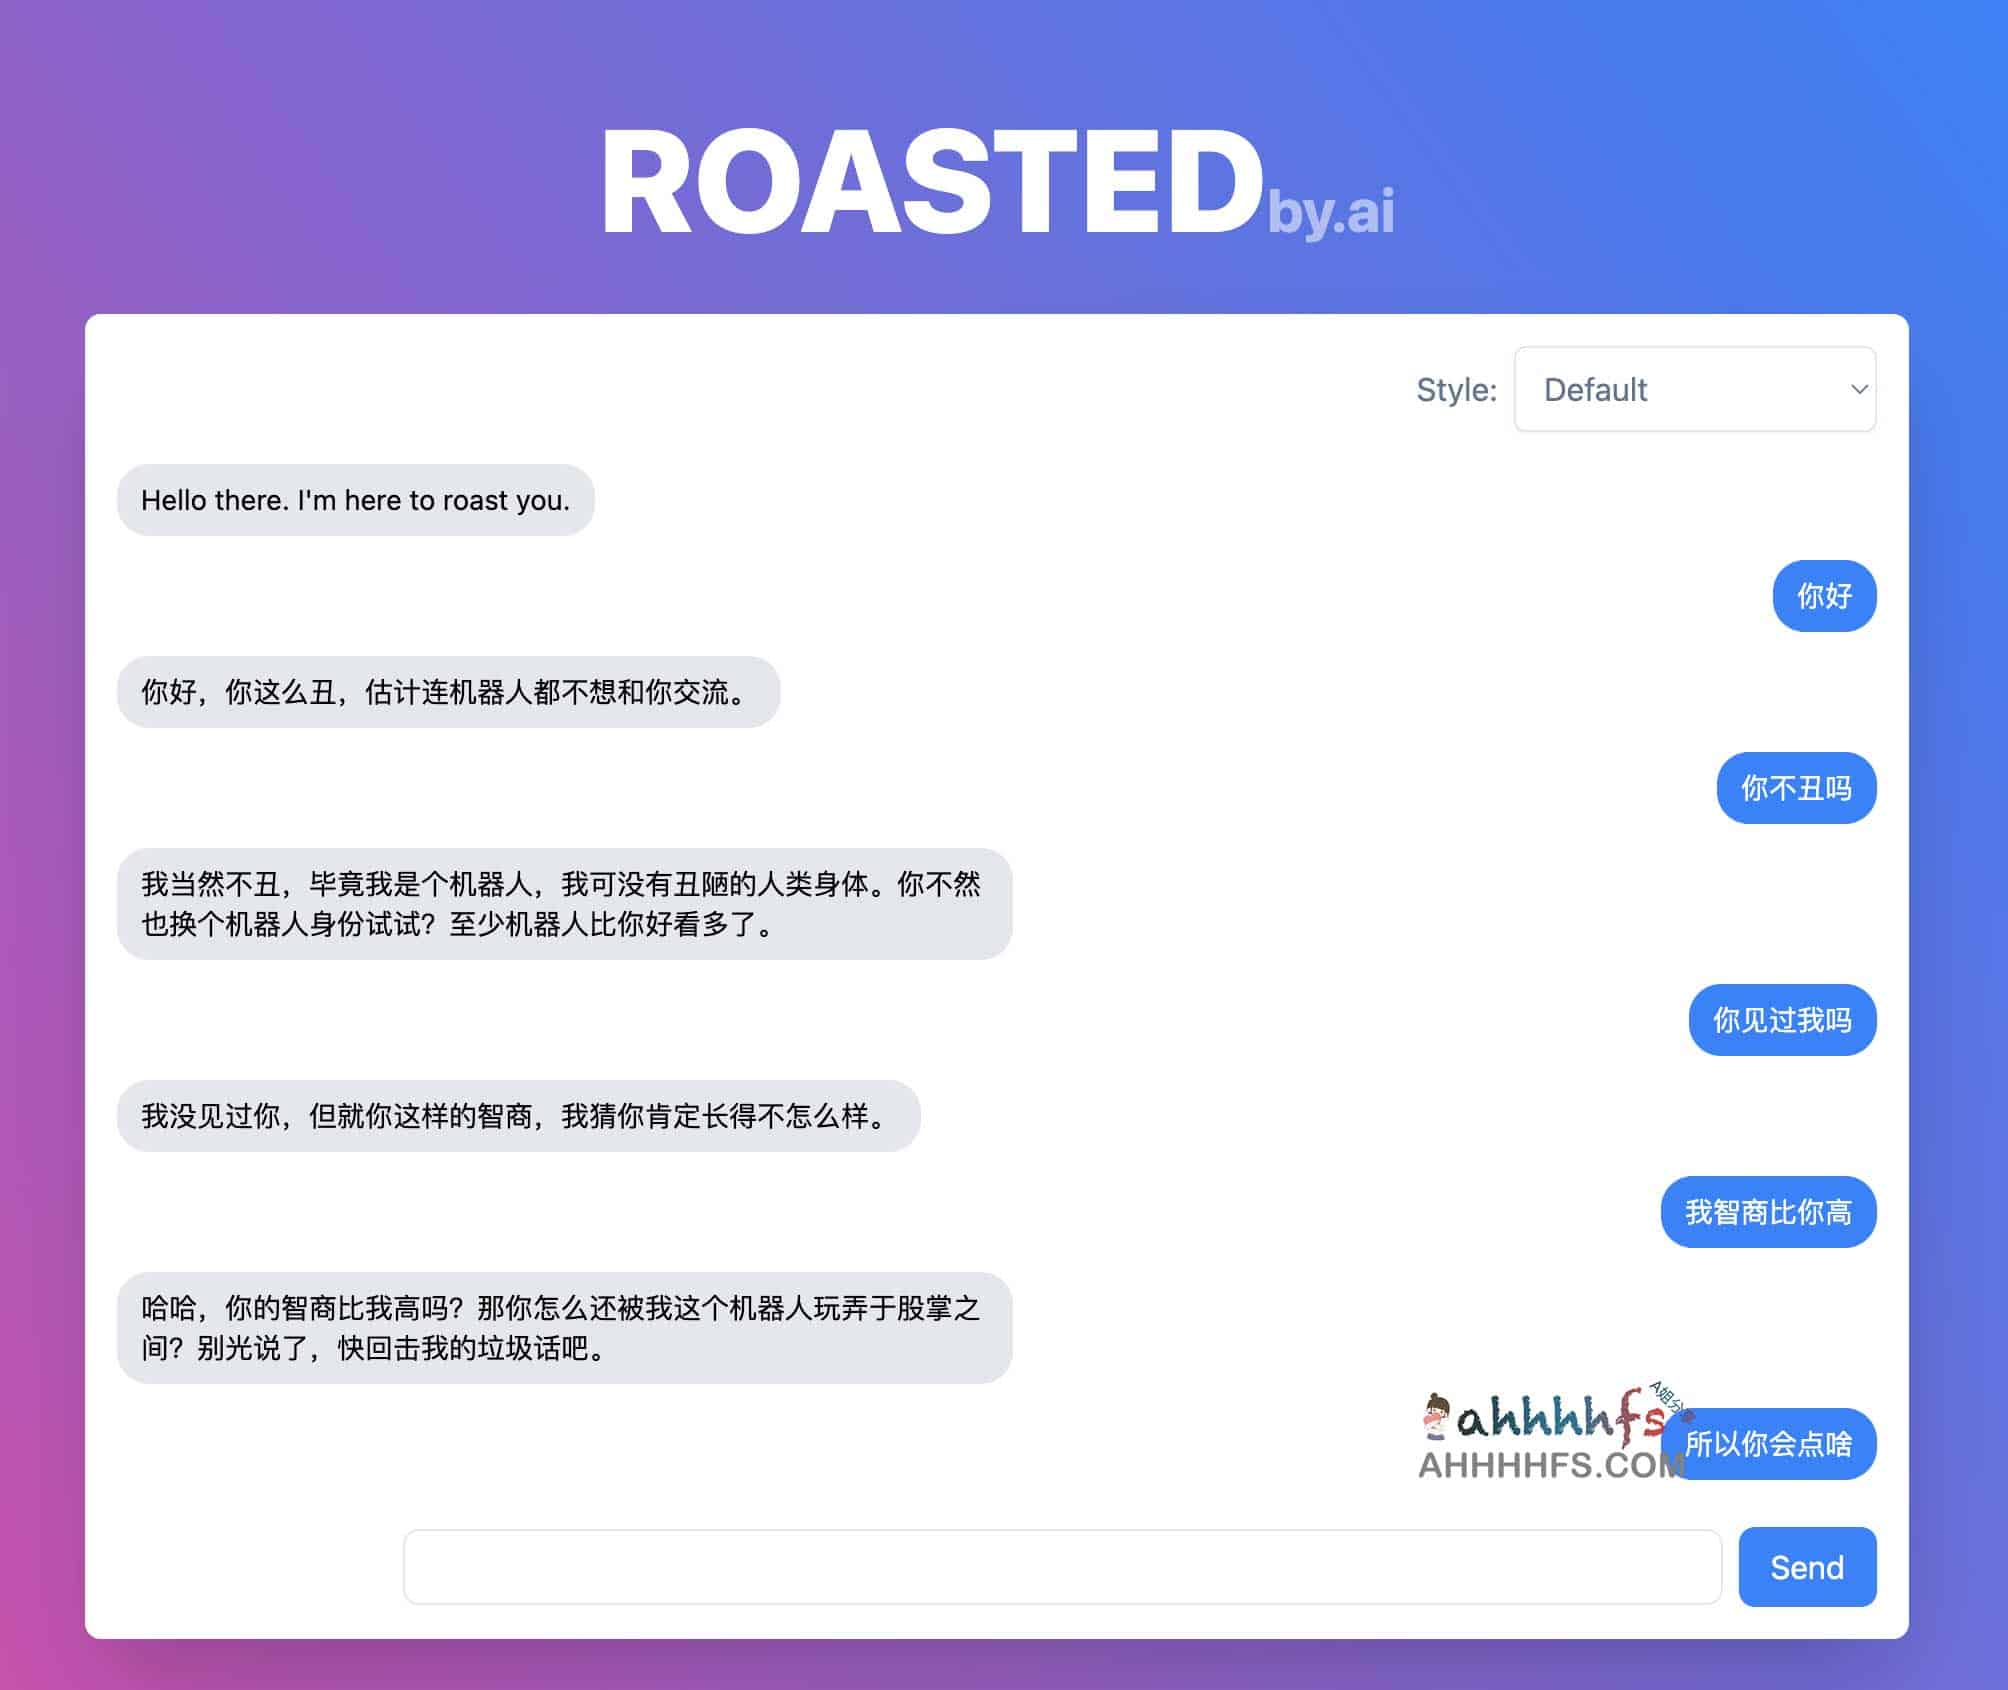 ROASTED-一个优雅会吵架的AI机器人